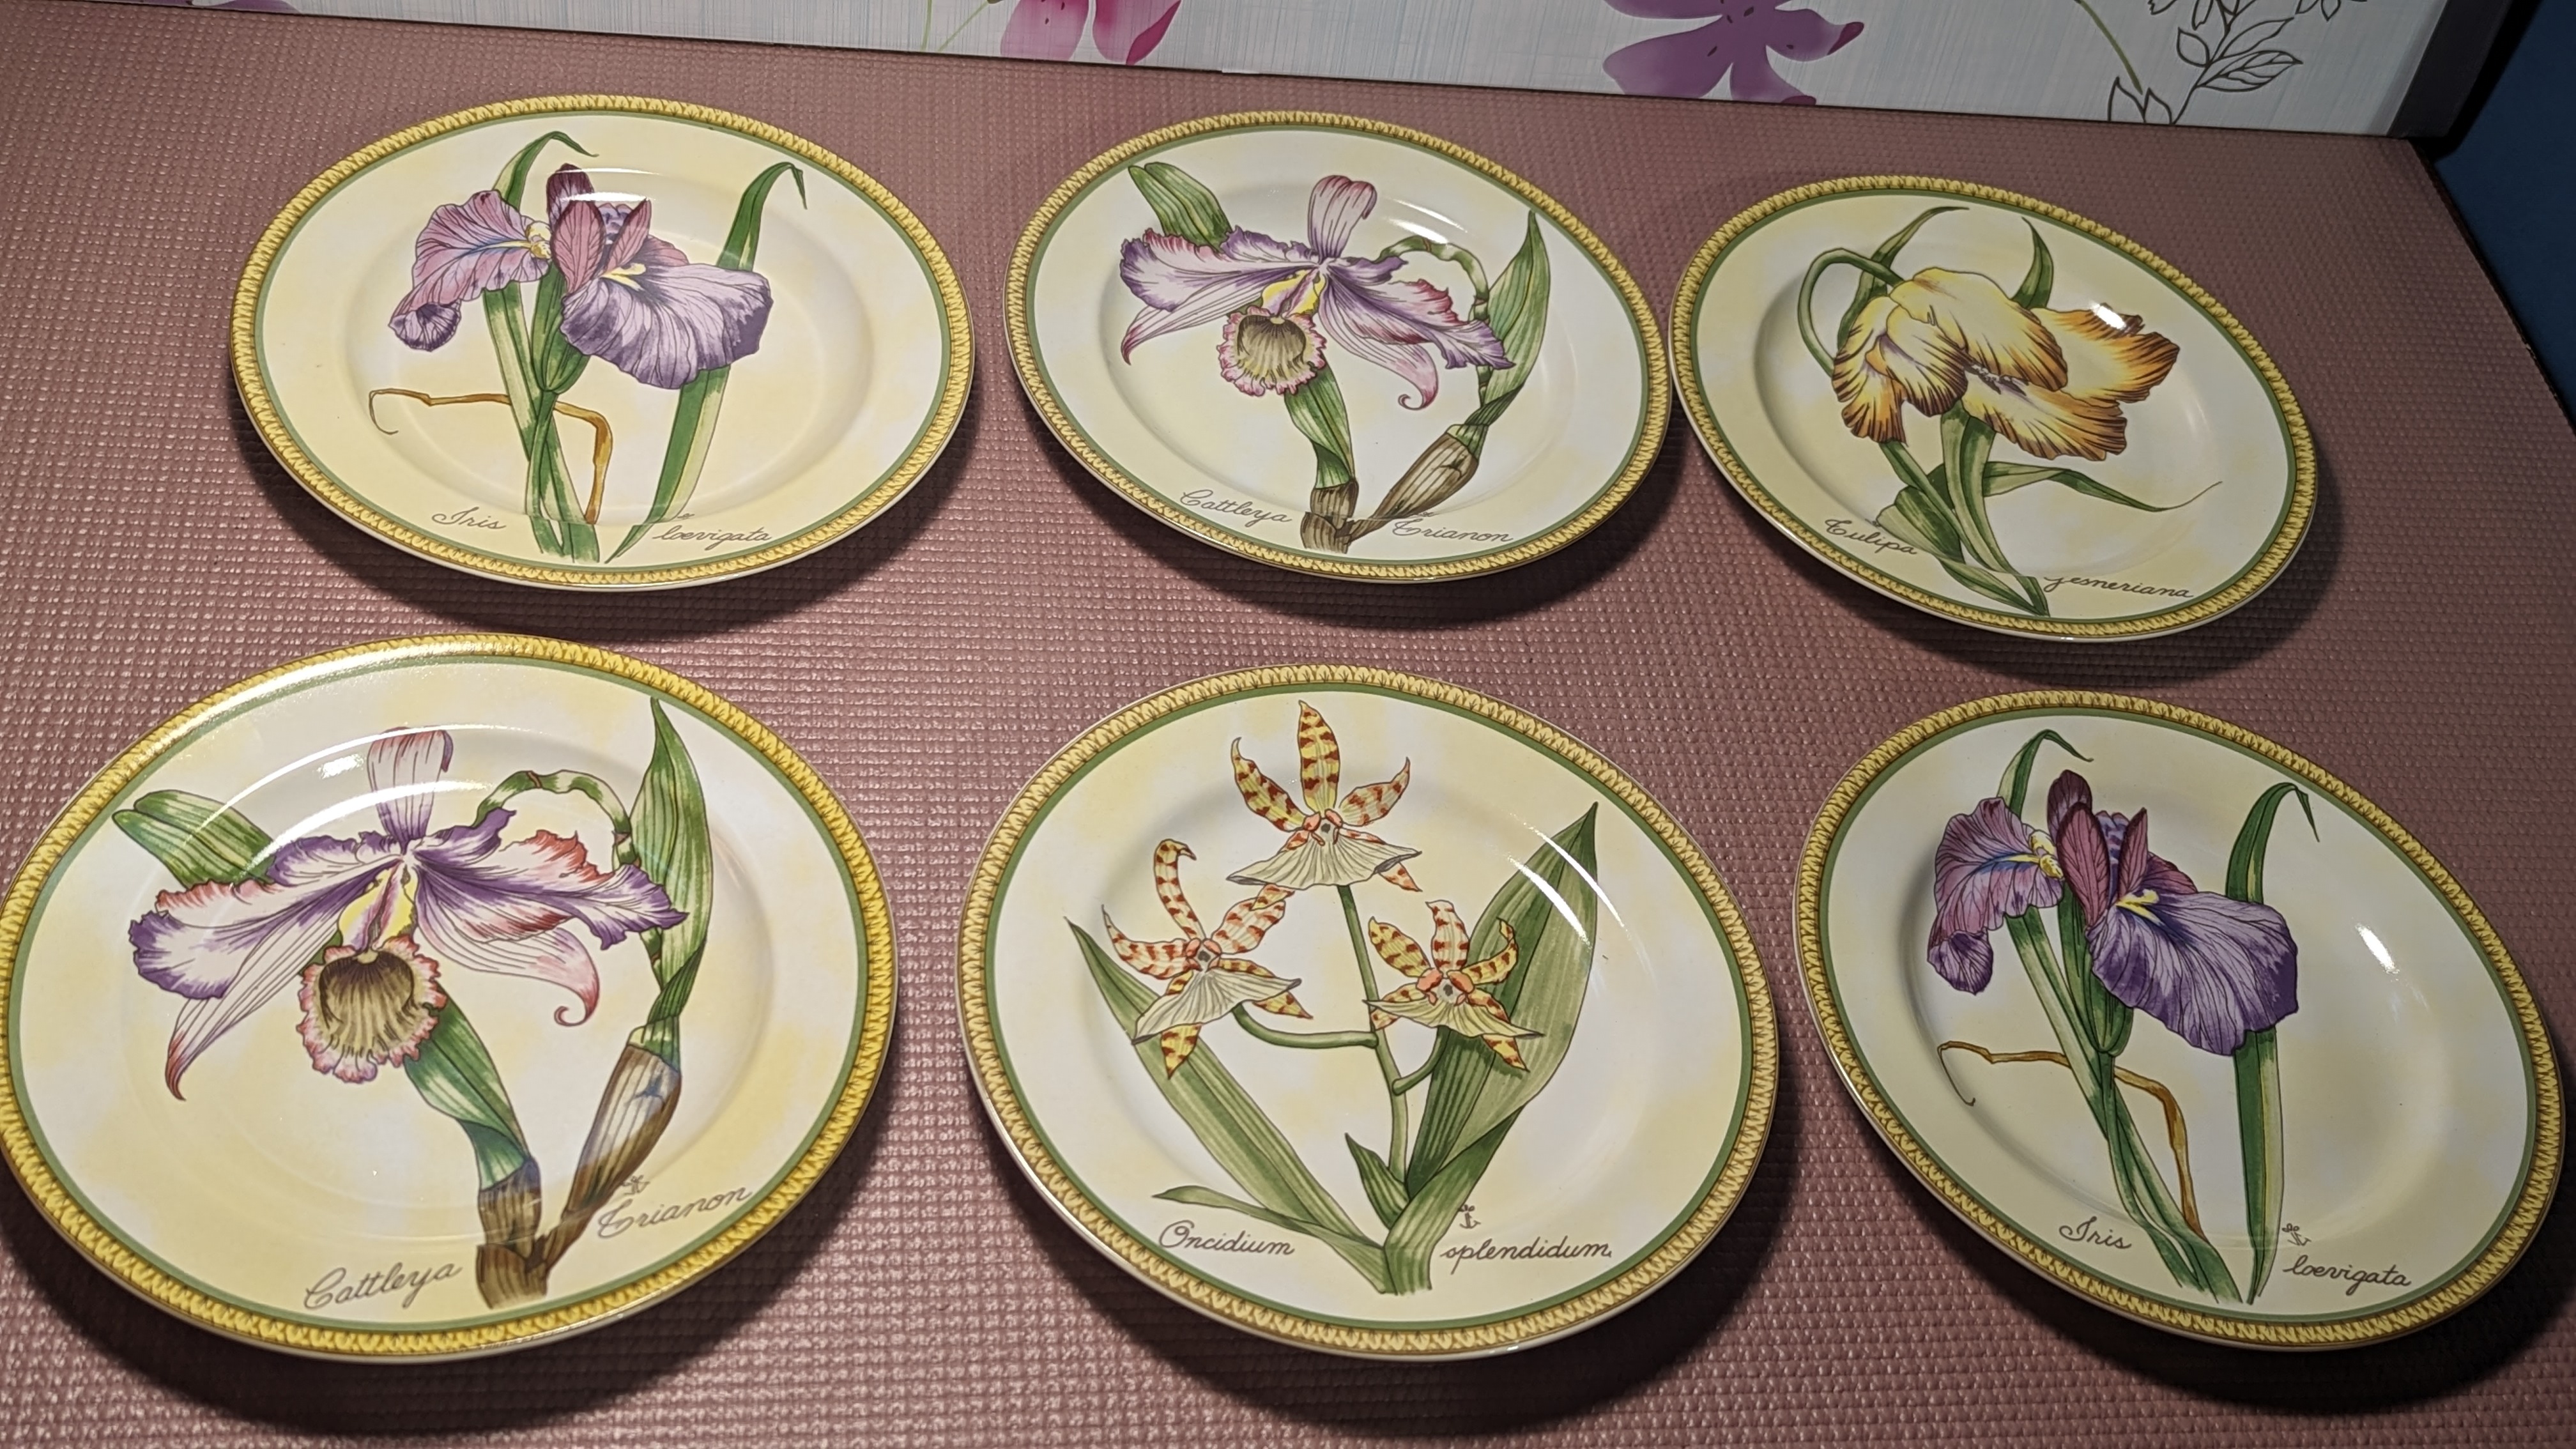 American Atelier Botanical Plates - set of 6 VINTAGE